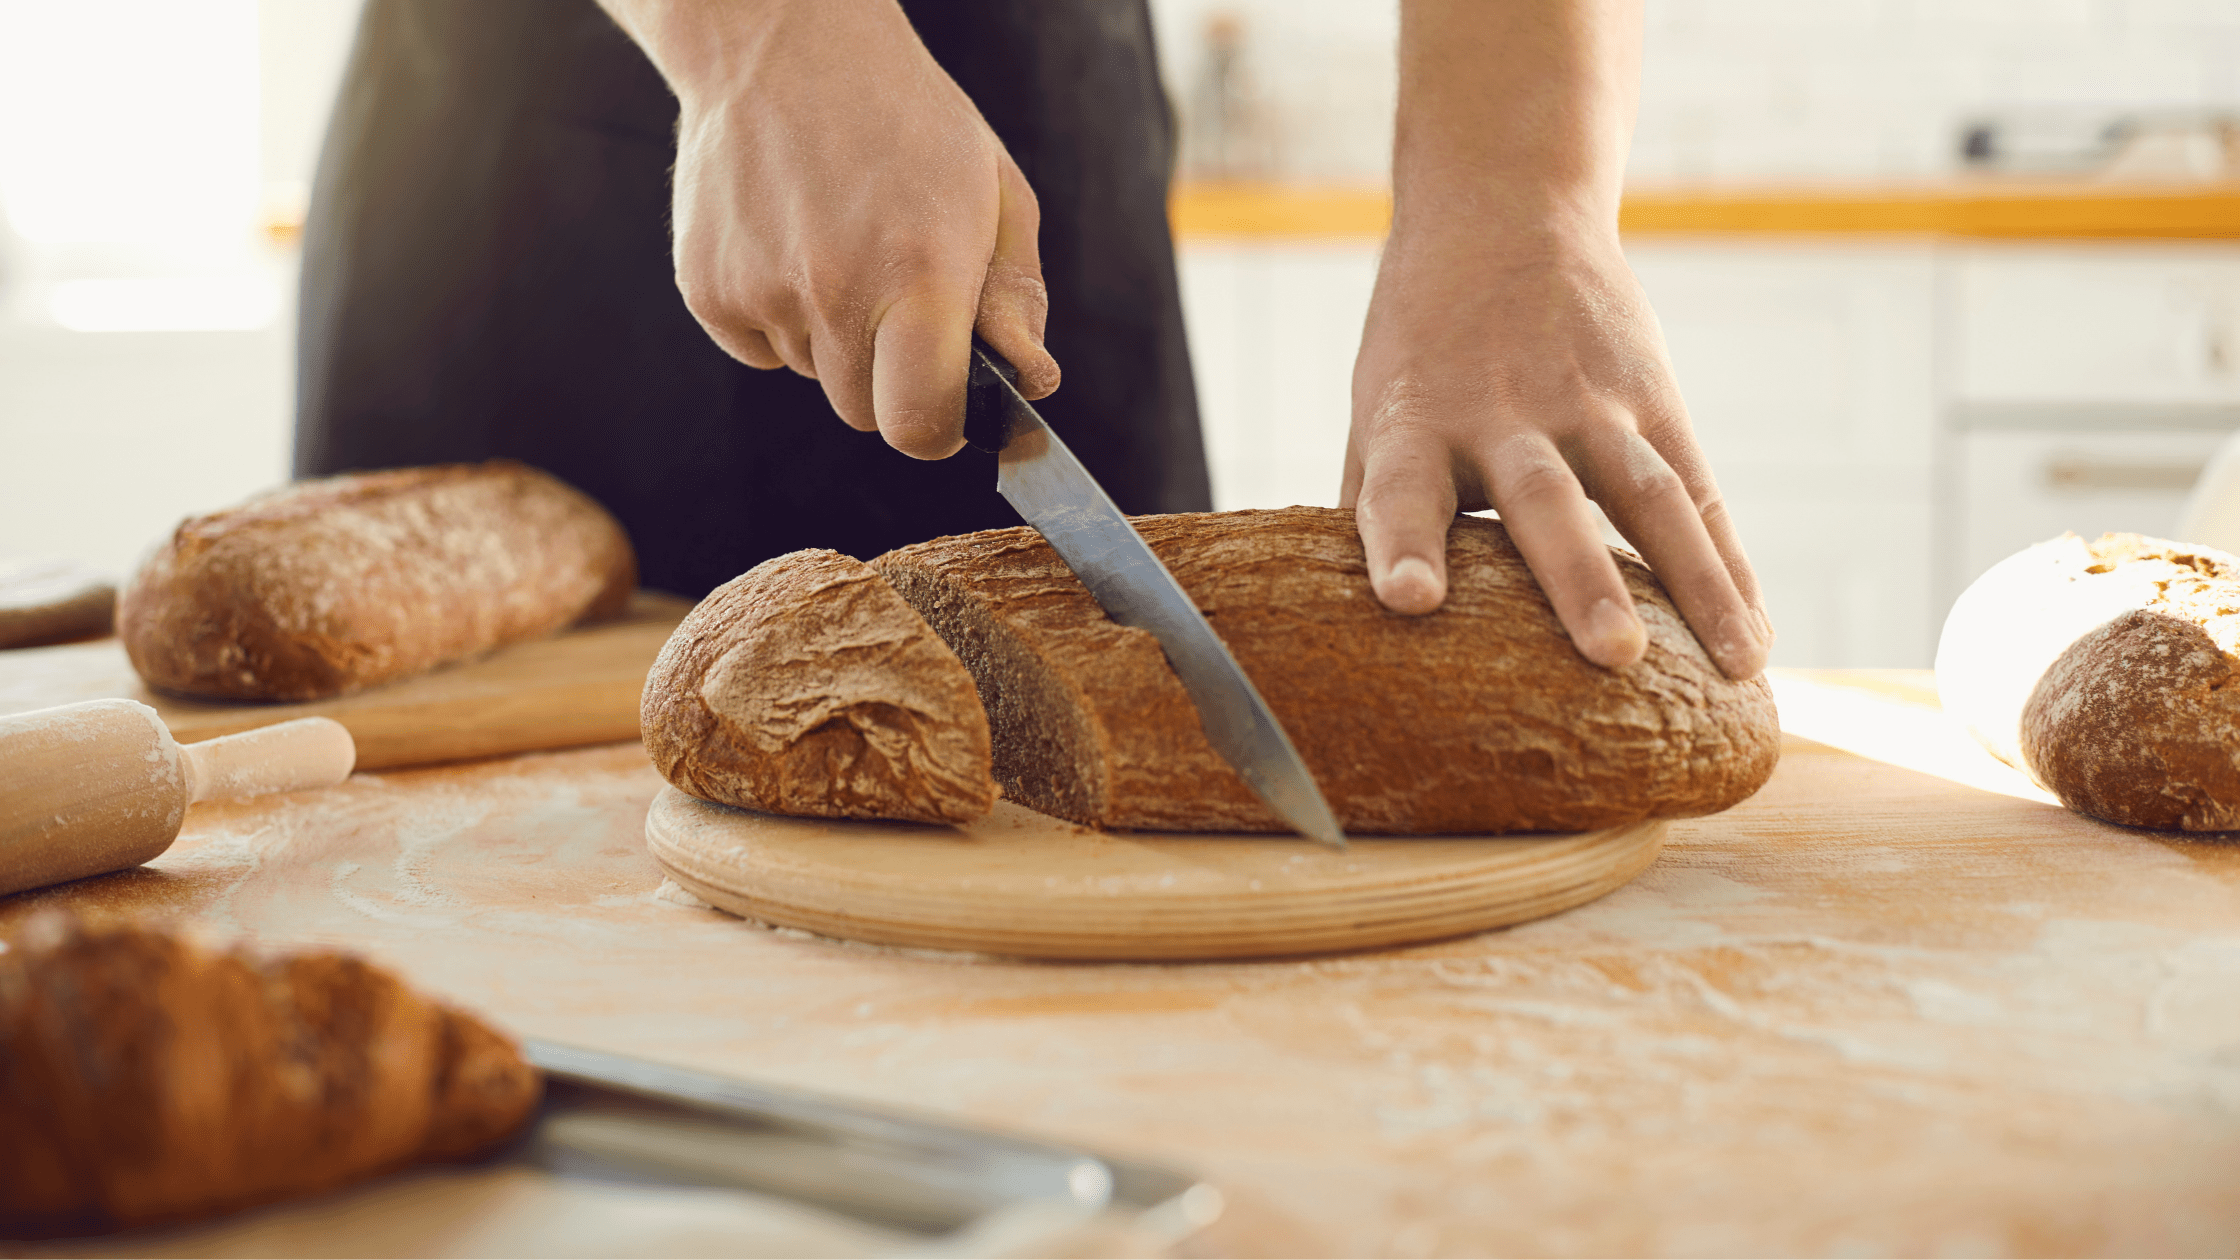 Benefits of Artisan Bread